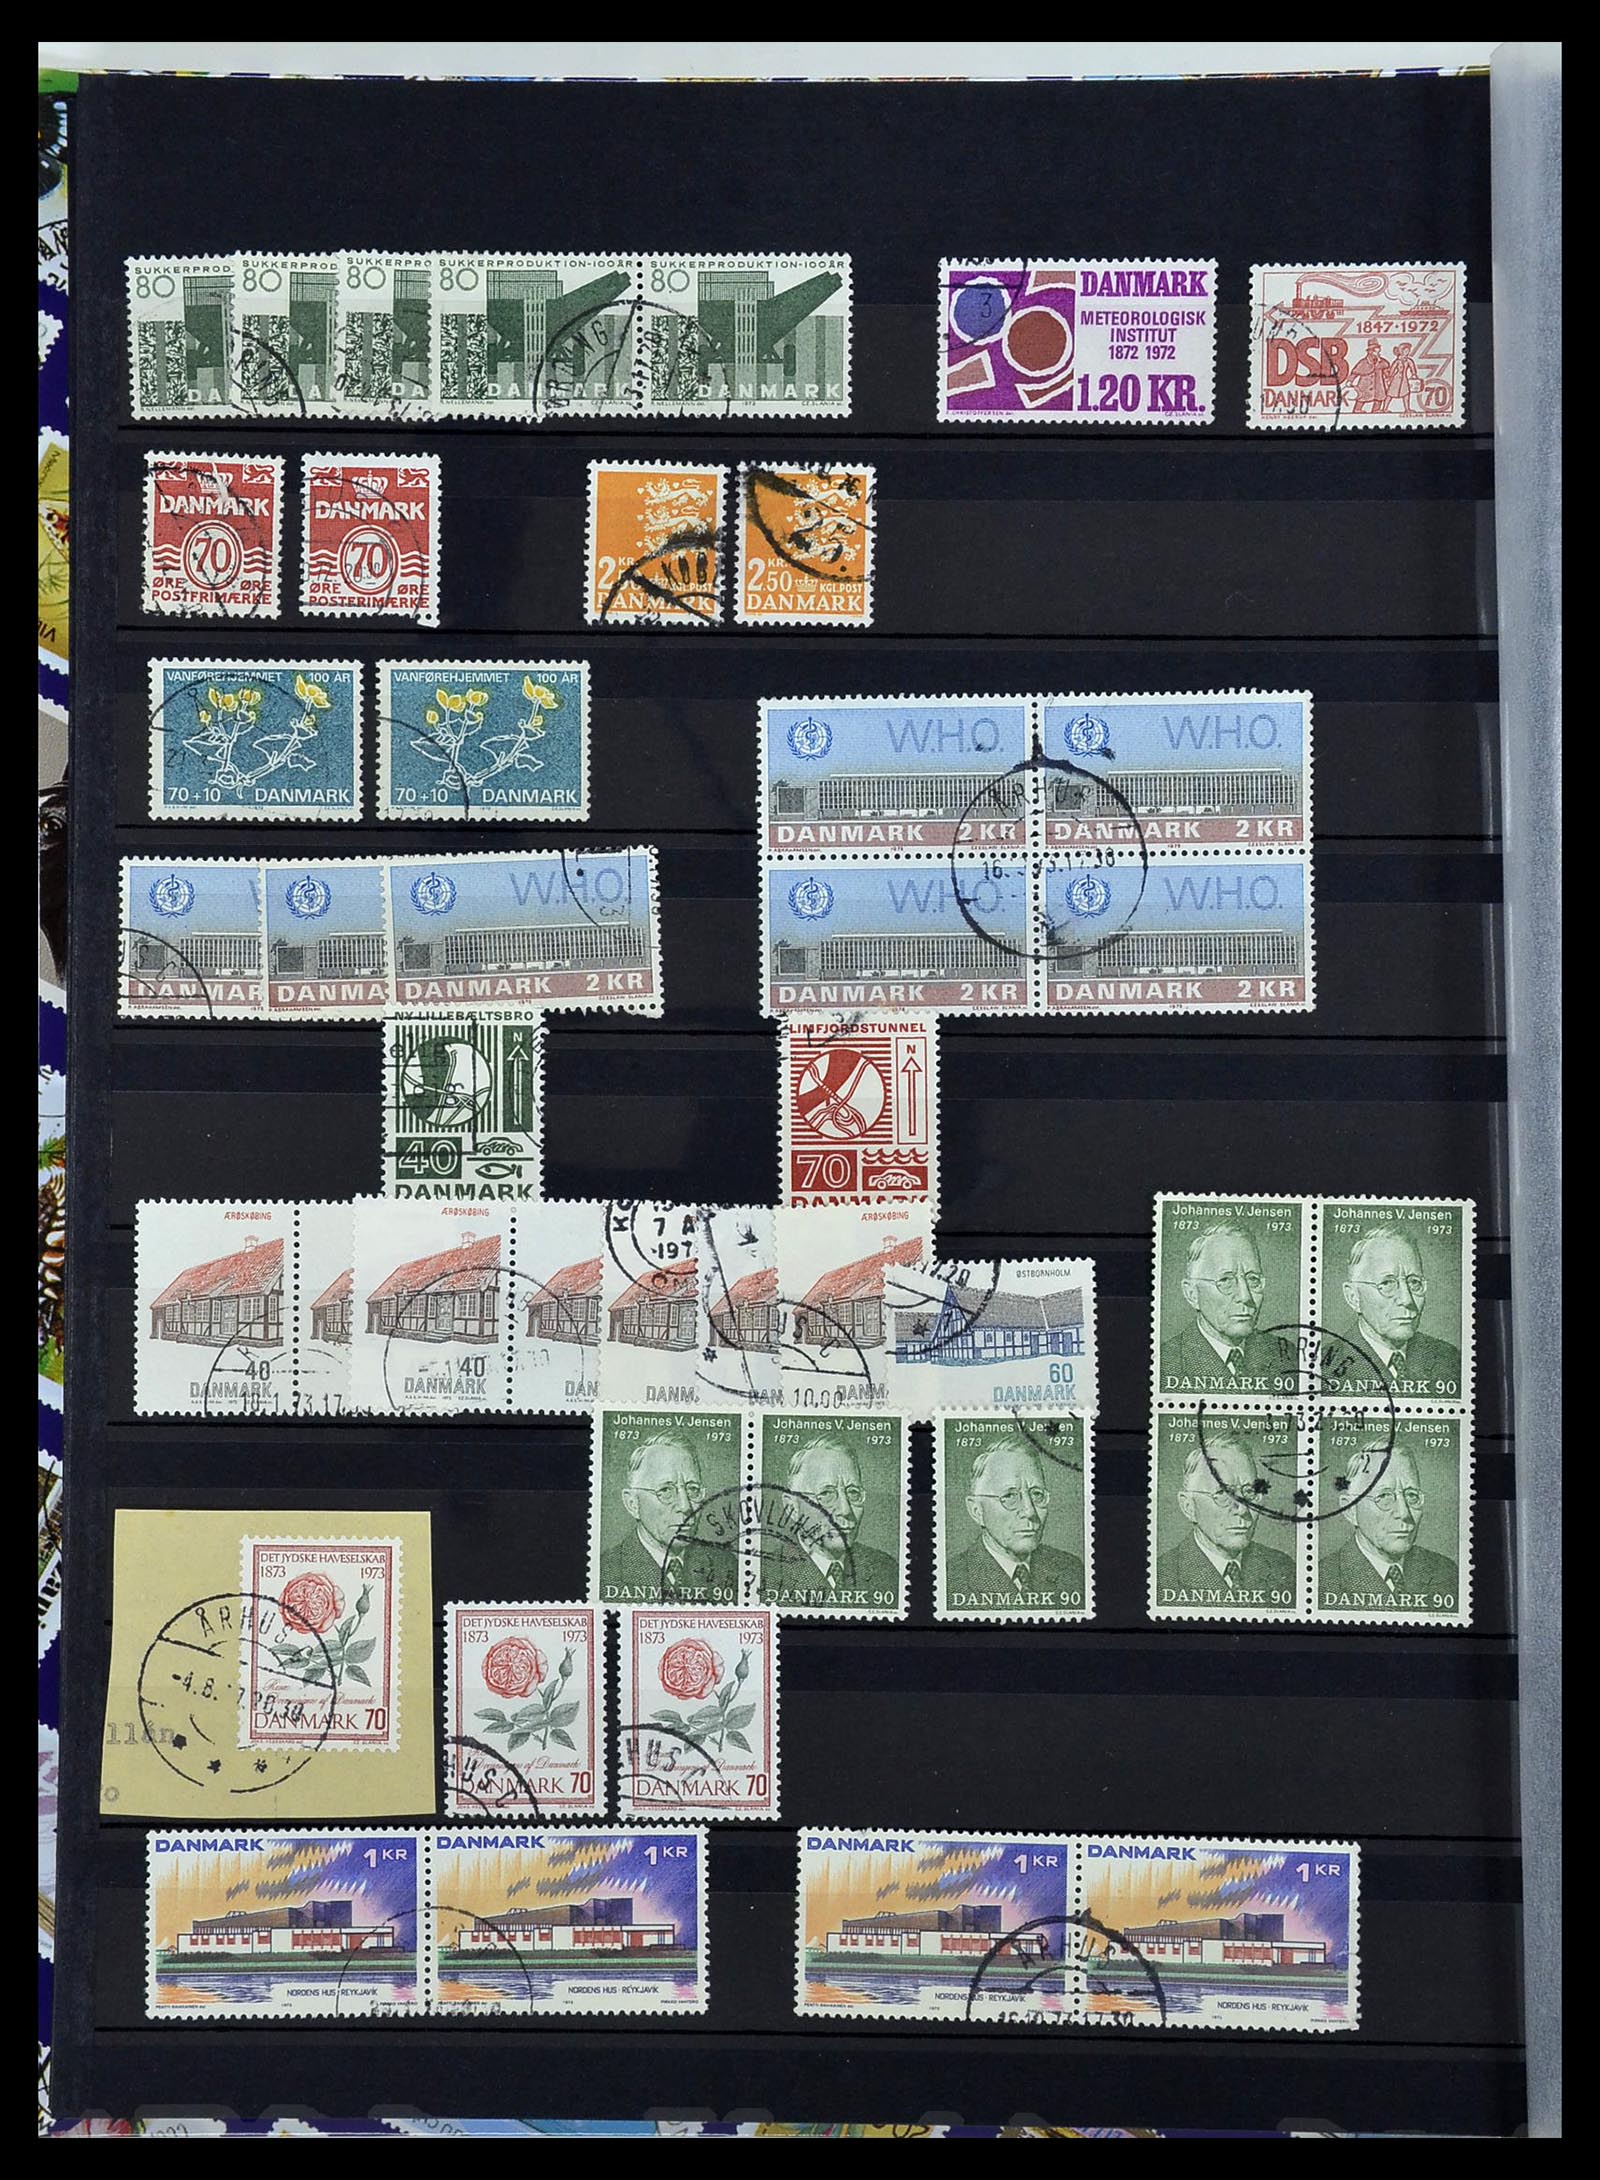 34313 435 - Stamp collection 34313 Scandinavia 1856-1990.